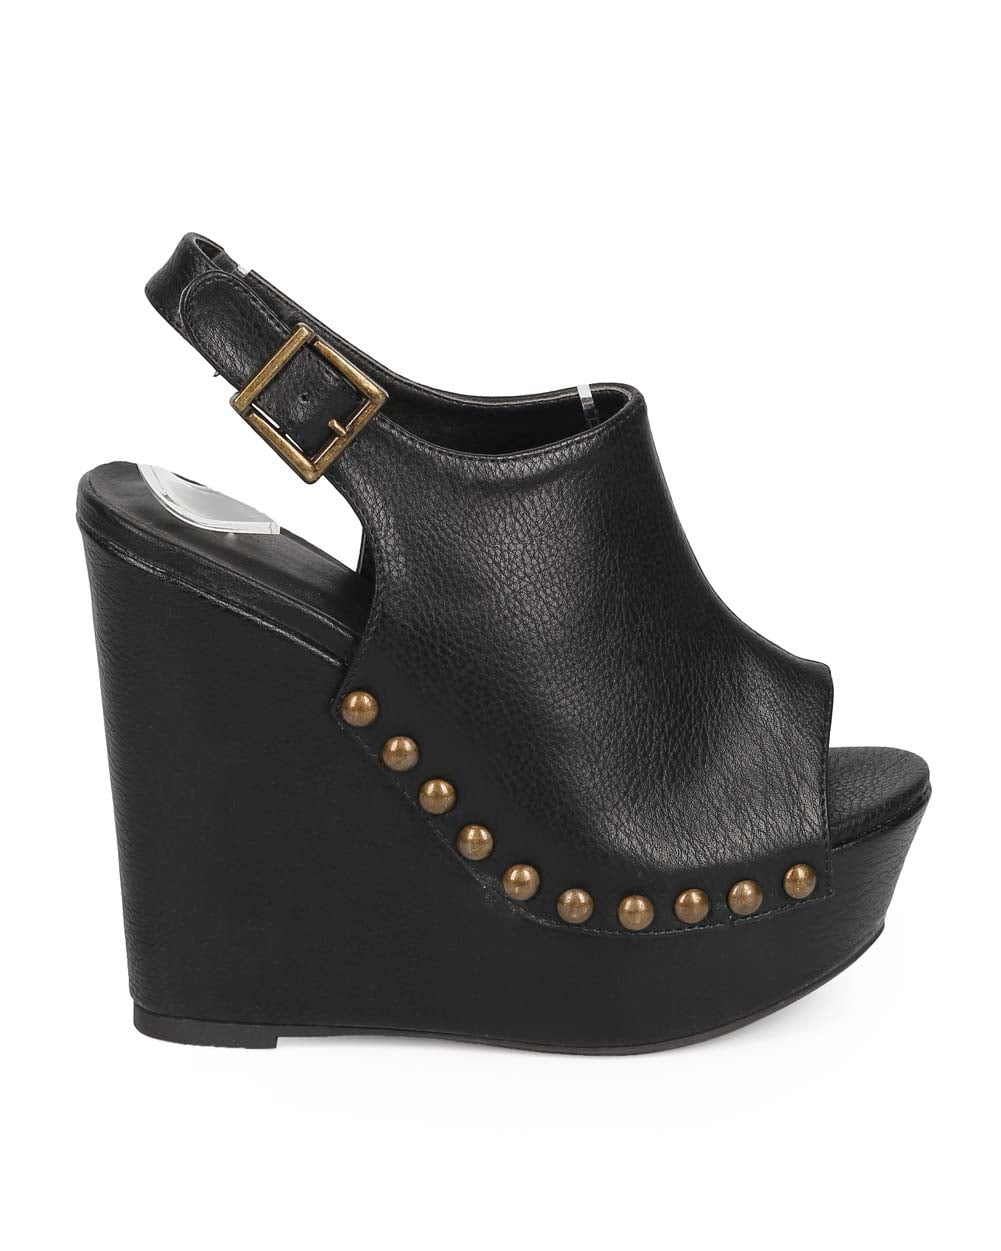 Details about   Black Color Strappy 1.85" Wedges Heels Women Slingback Clog Sandals Size 8.5 